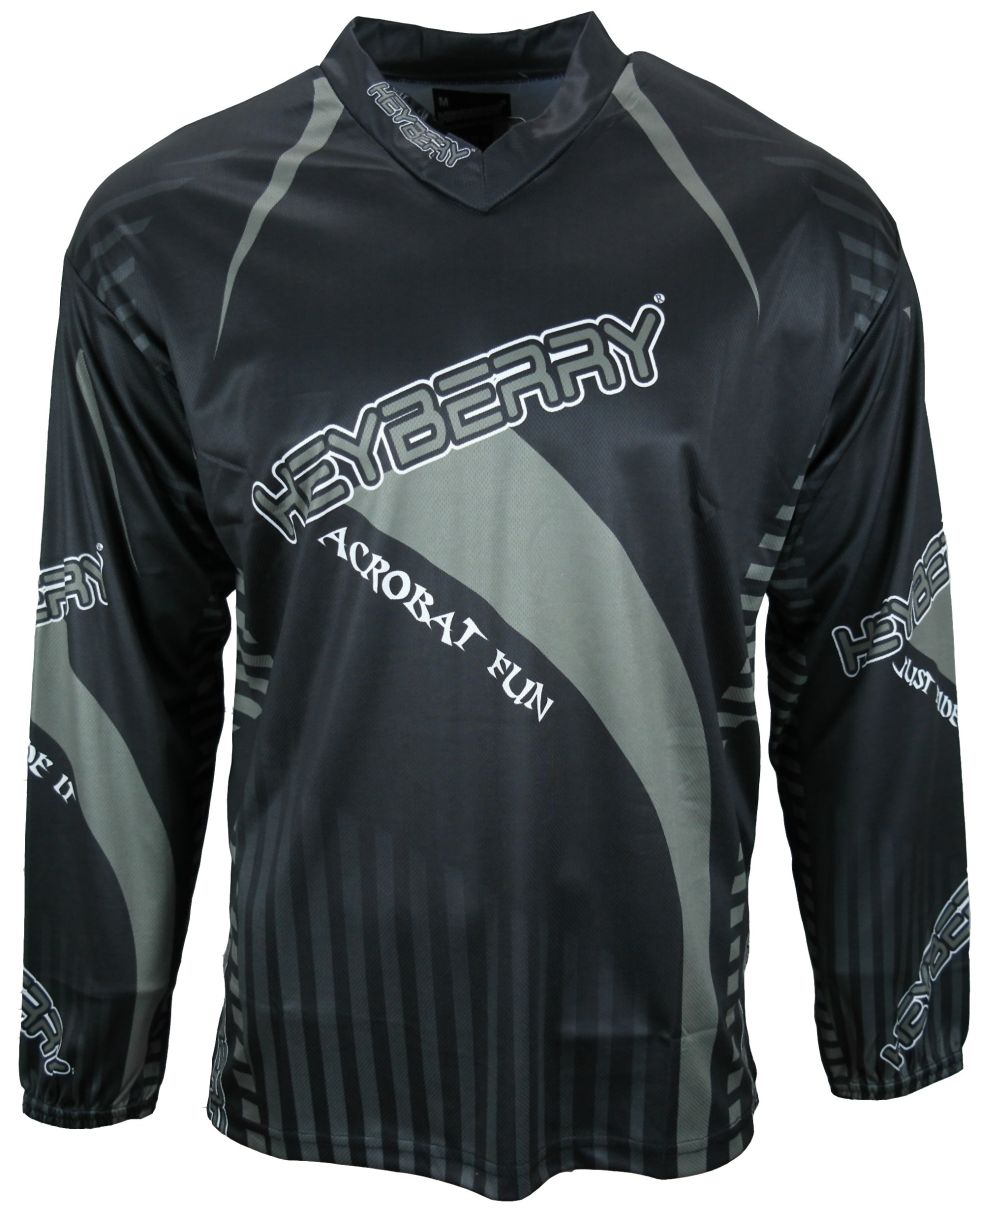 Heyberry Motocross MX Shirt Jersey Trikot schwarz grau Größe M L XL XXL